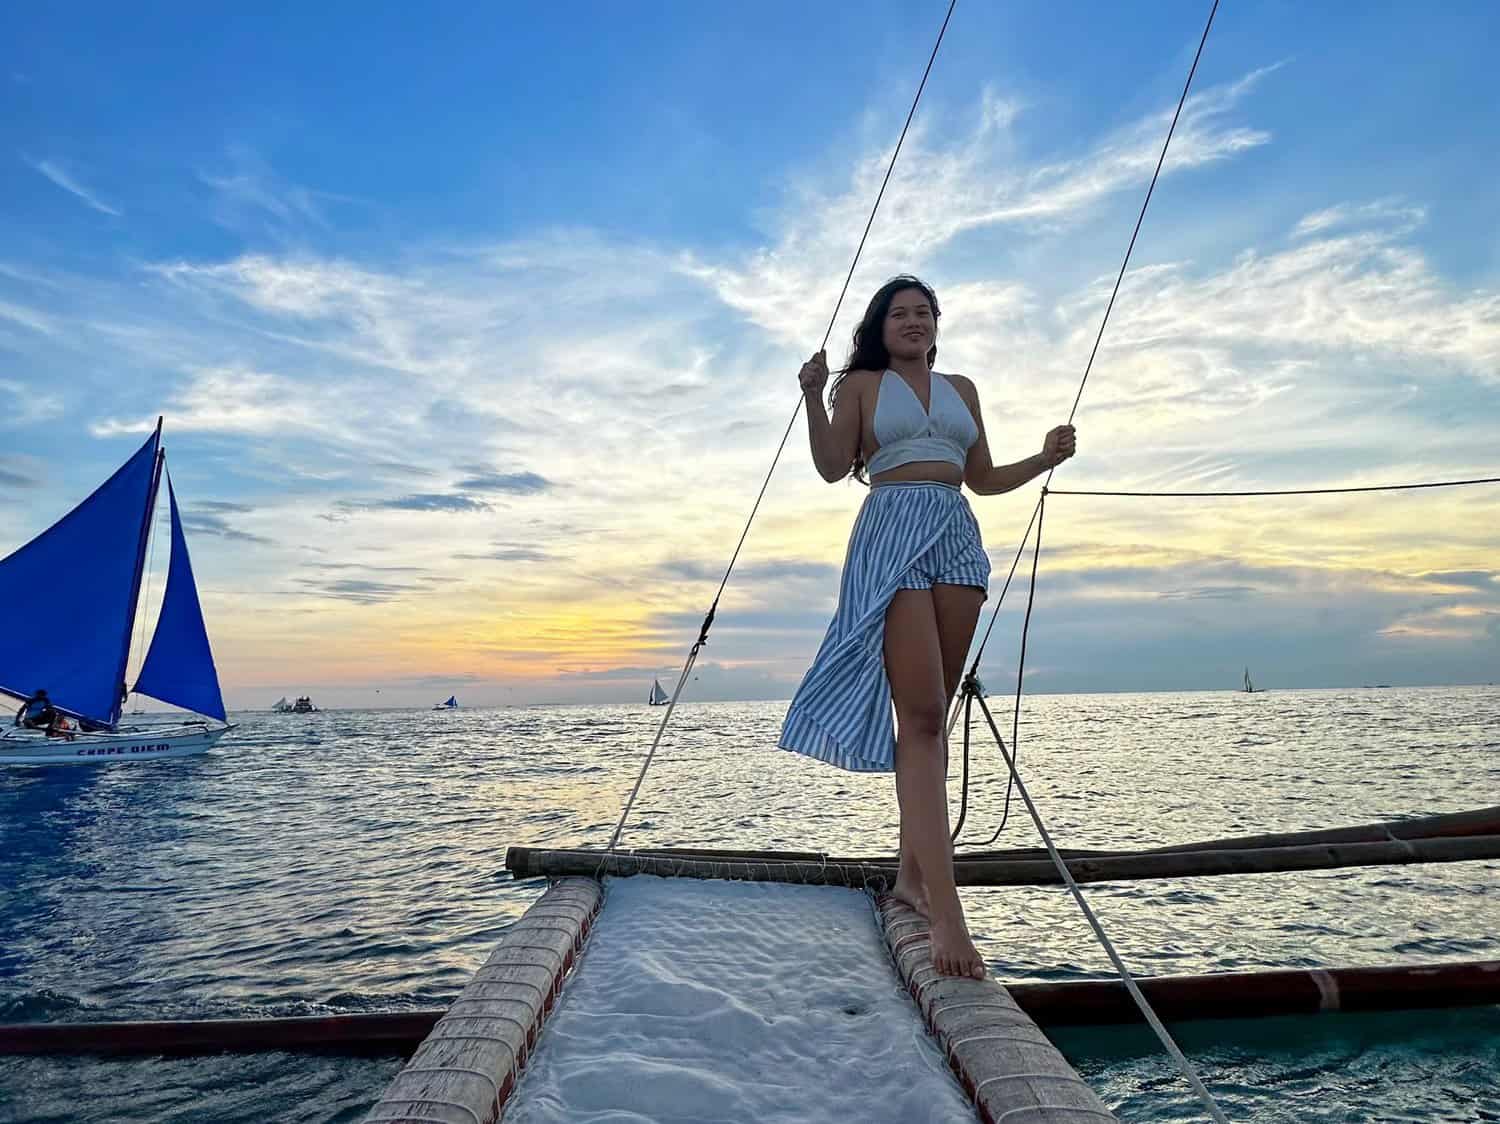 I am on a traditional Filipino paraw sailboat sailing at sunset in Boracay.